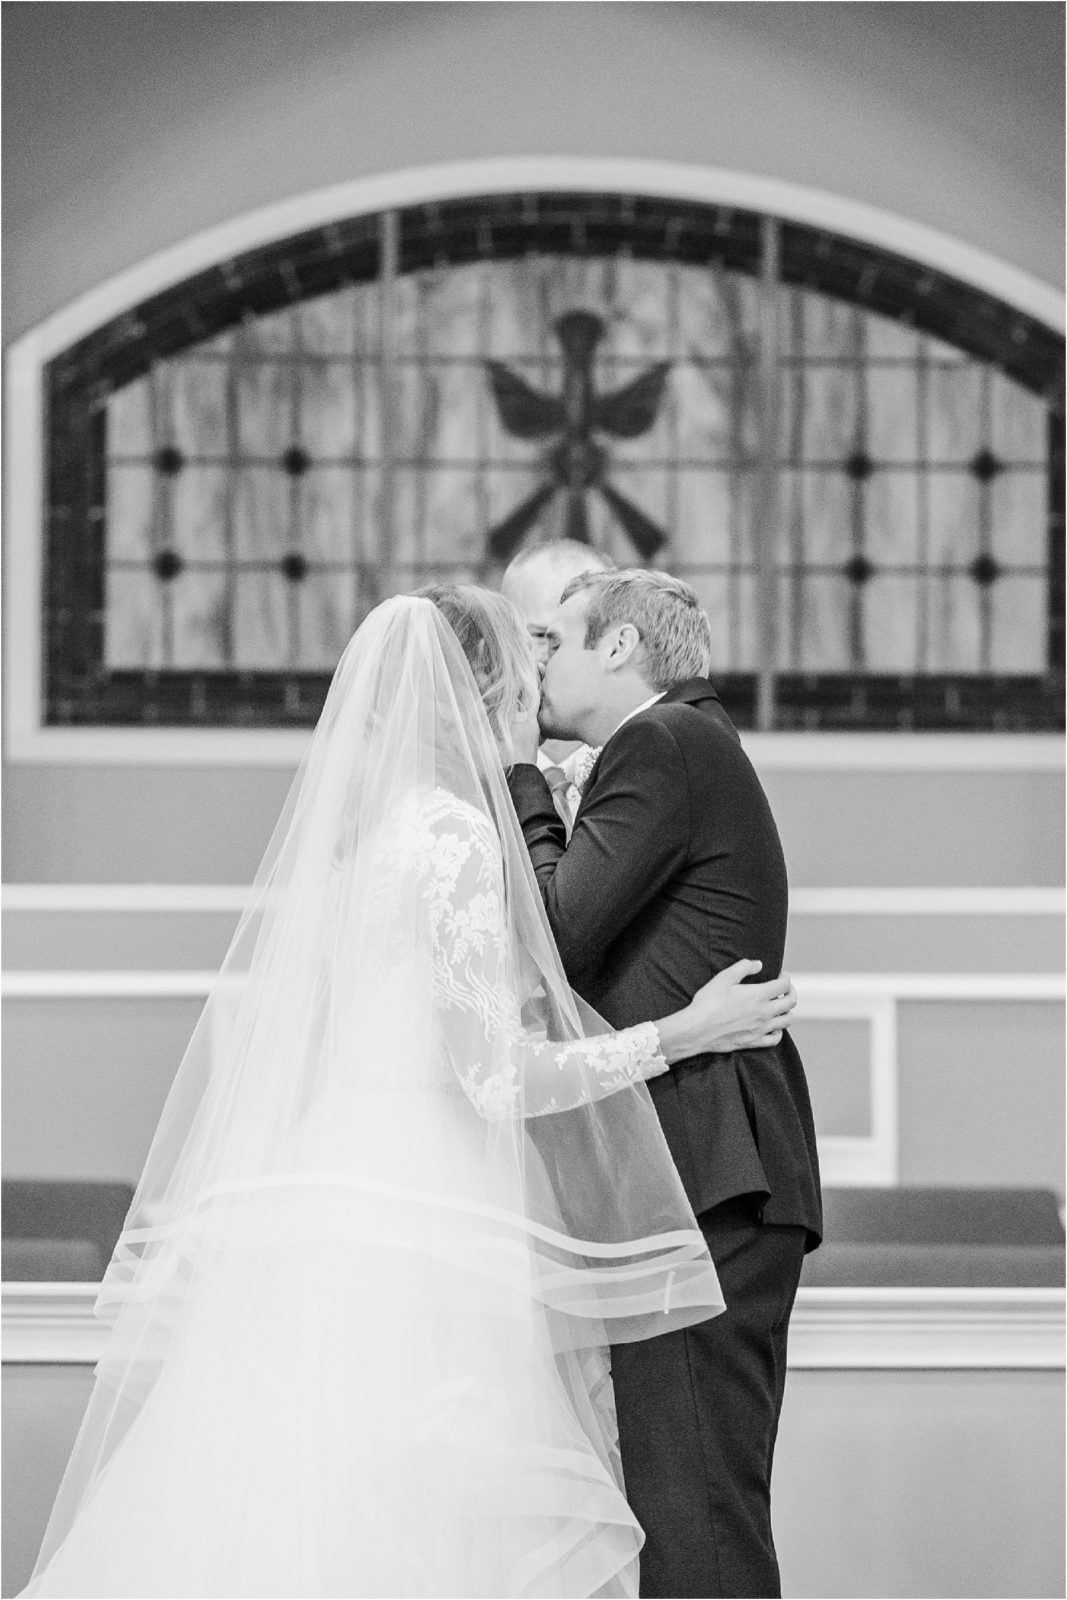 Groom and bride sharing first kiss at wedding